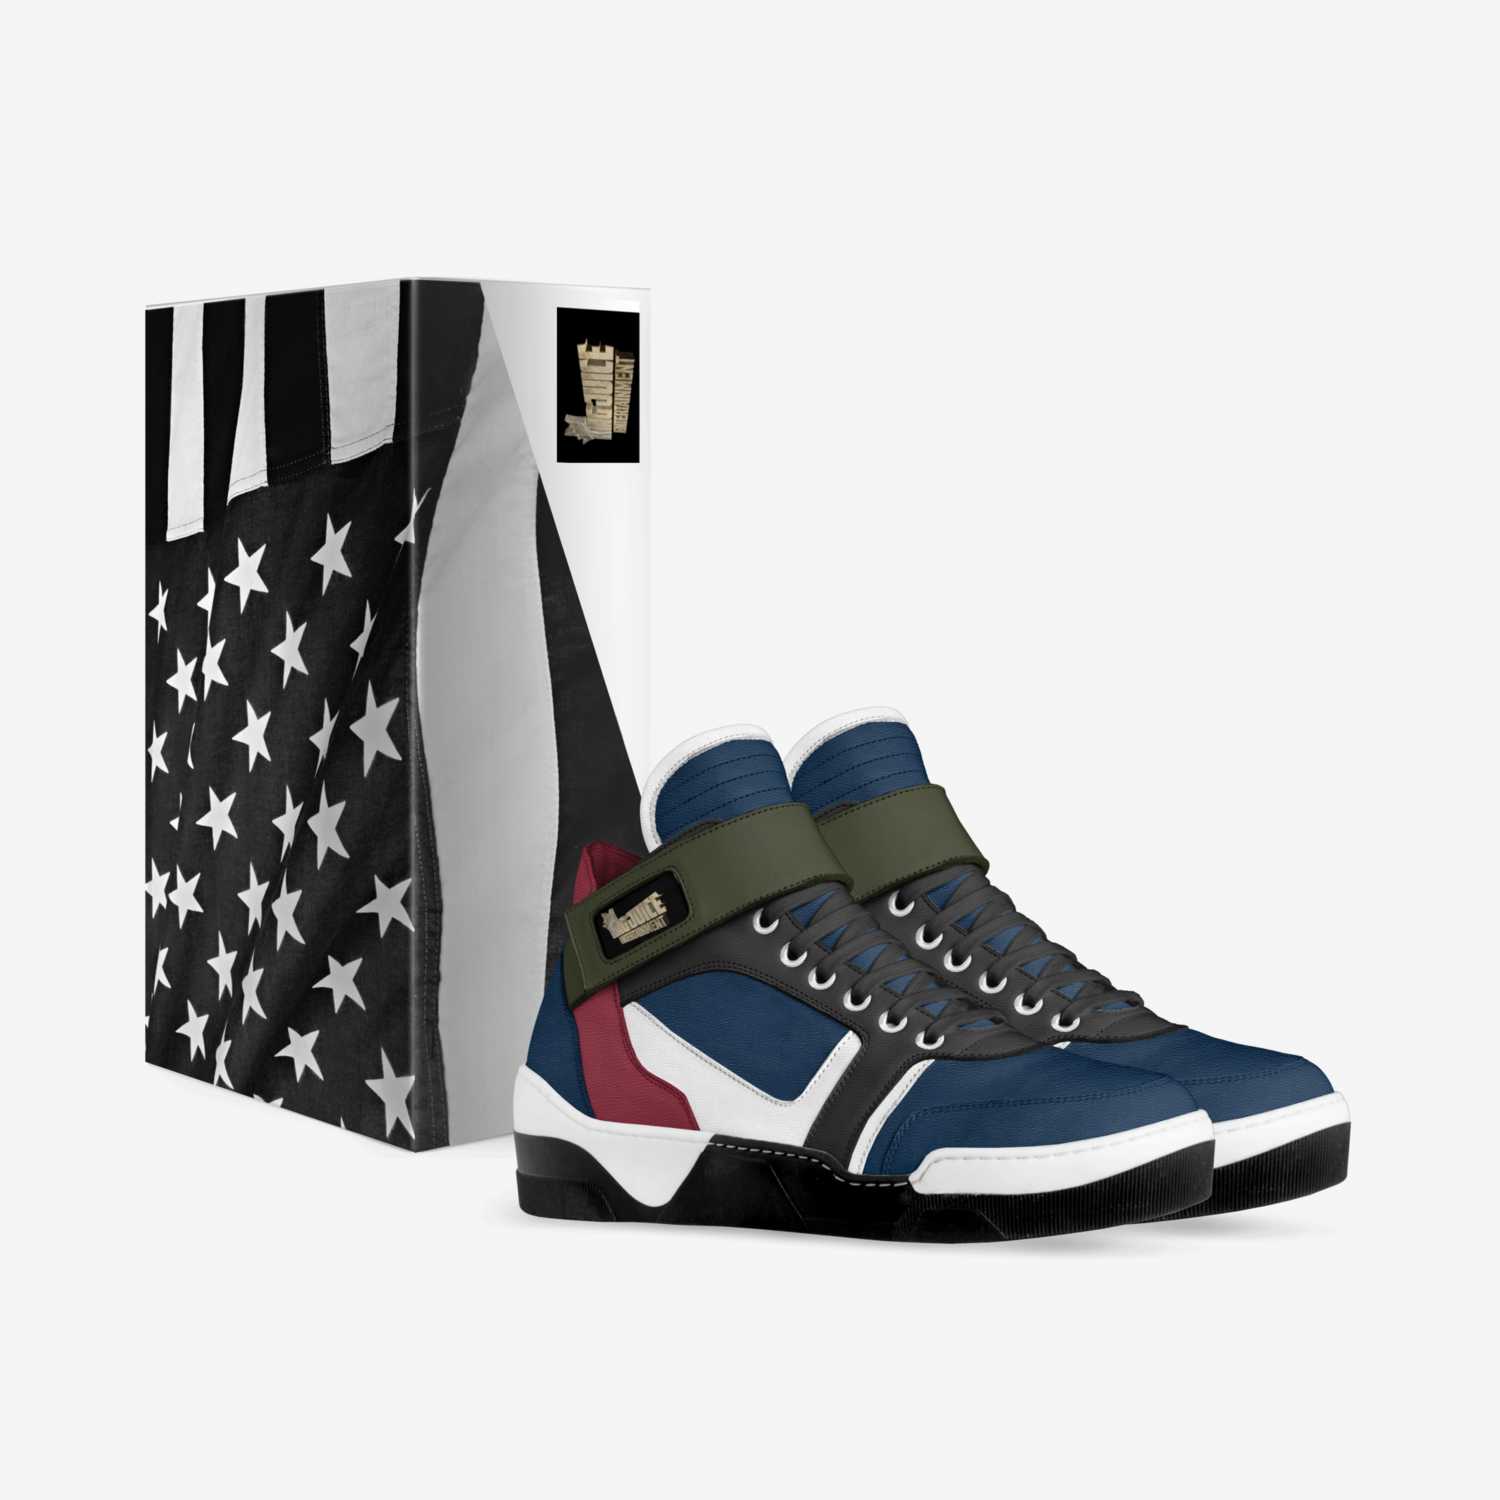 Sir Kranstons III custom made in Italy shoes by Kranston Ellis | Box view